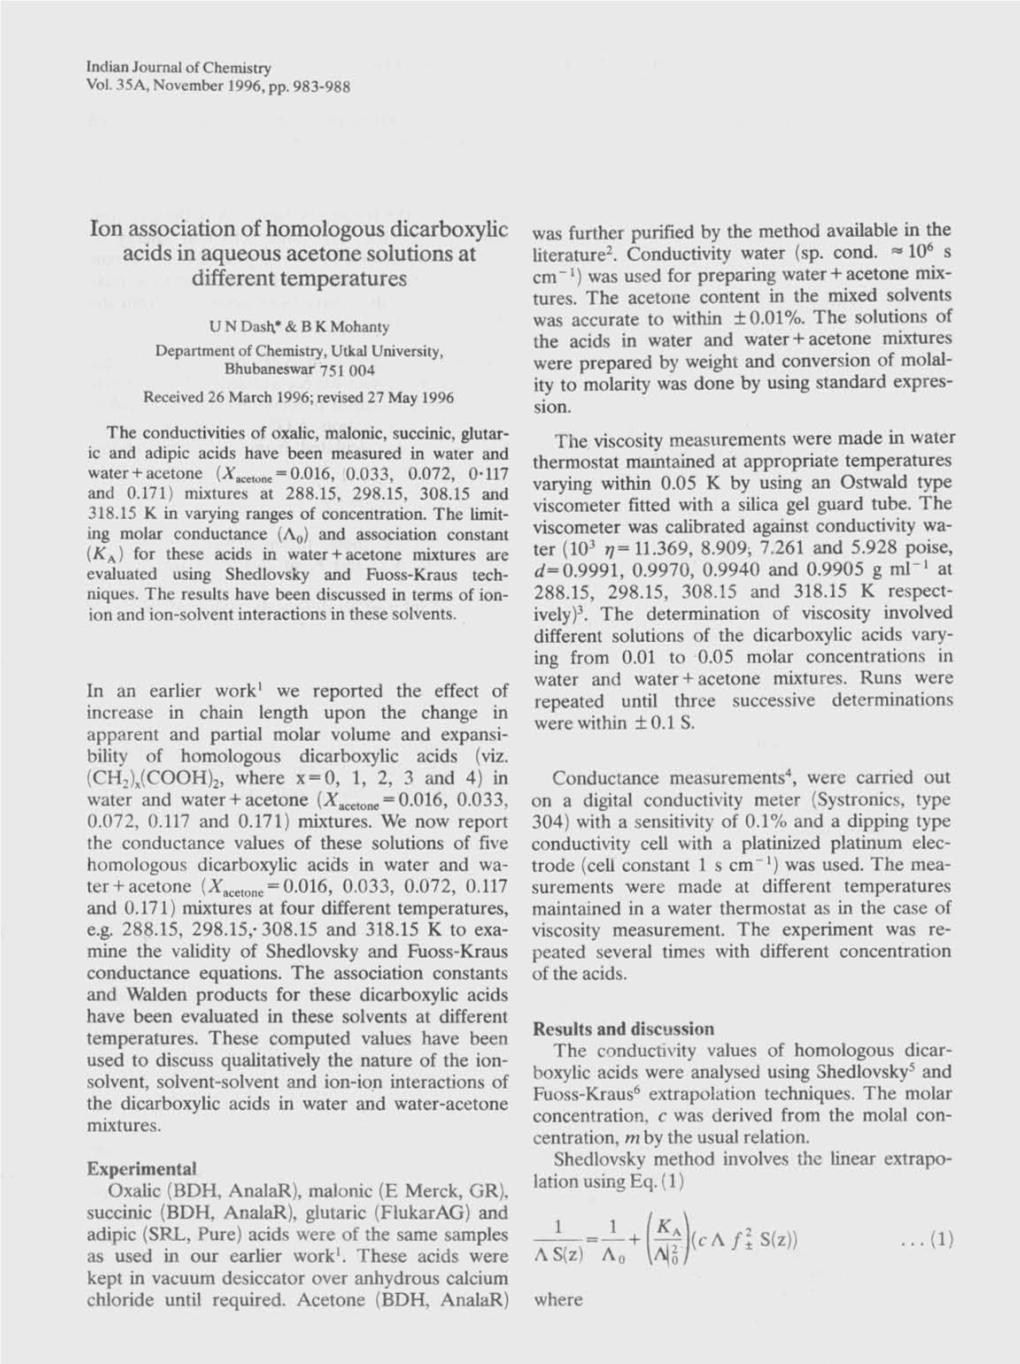 Ion Association Ofhomologous Dicarboxylic Acids in Aqueous